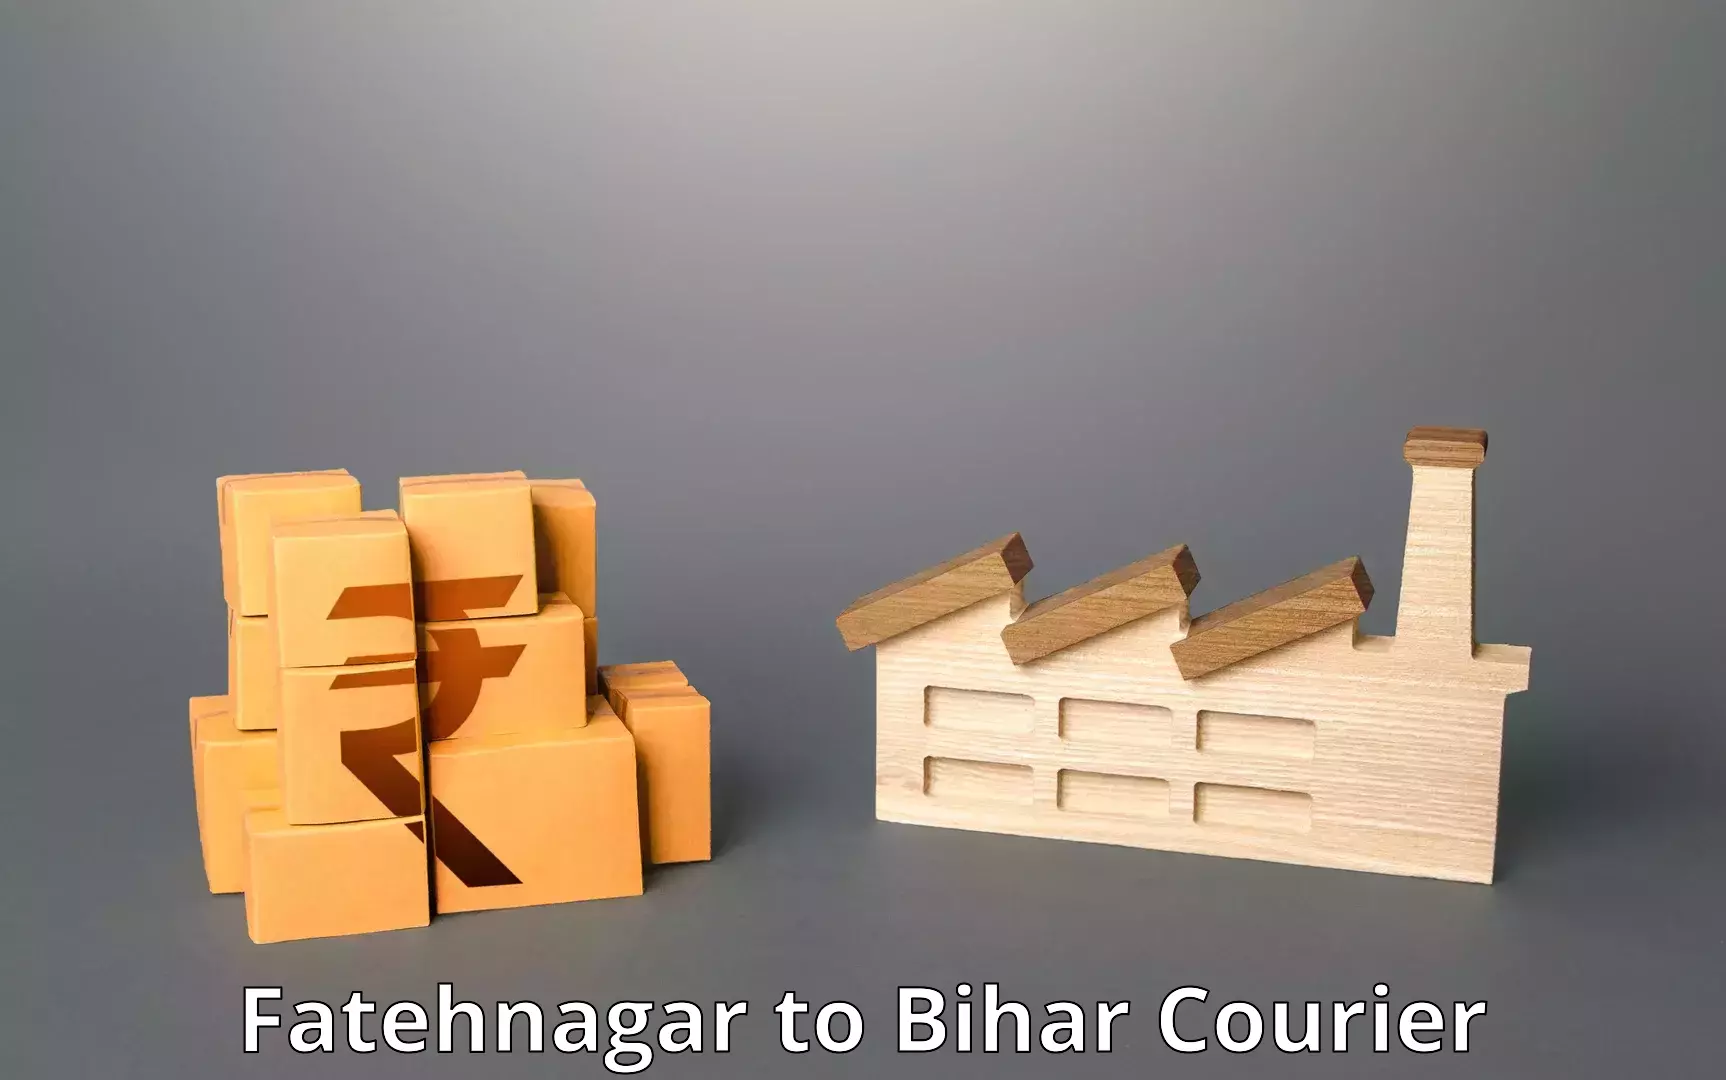 Express mail solutions in Fatehnagar to Aurangabad Bihar